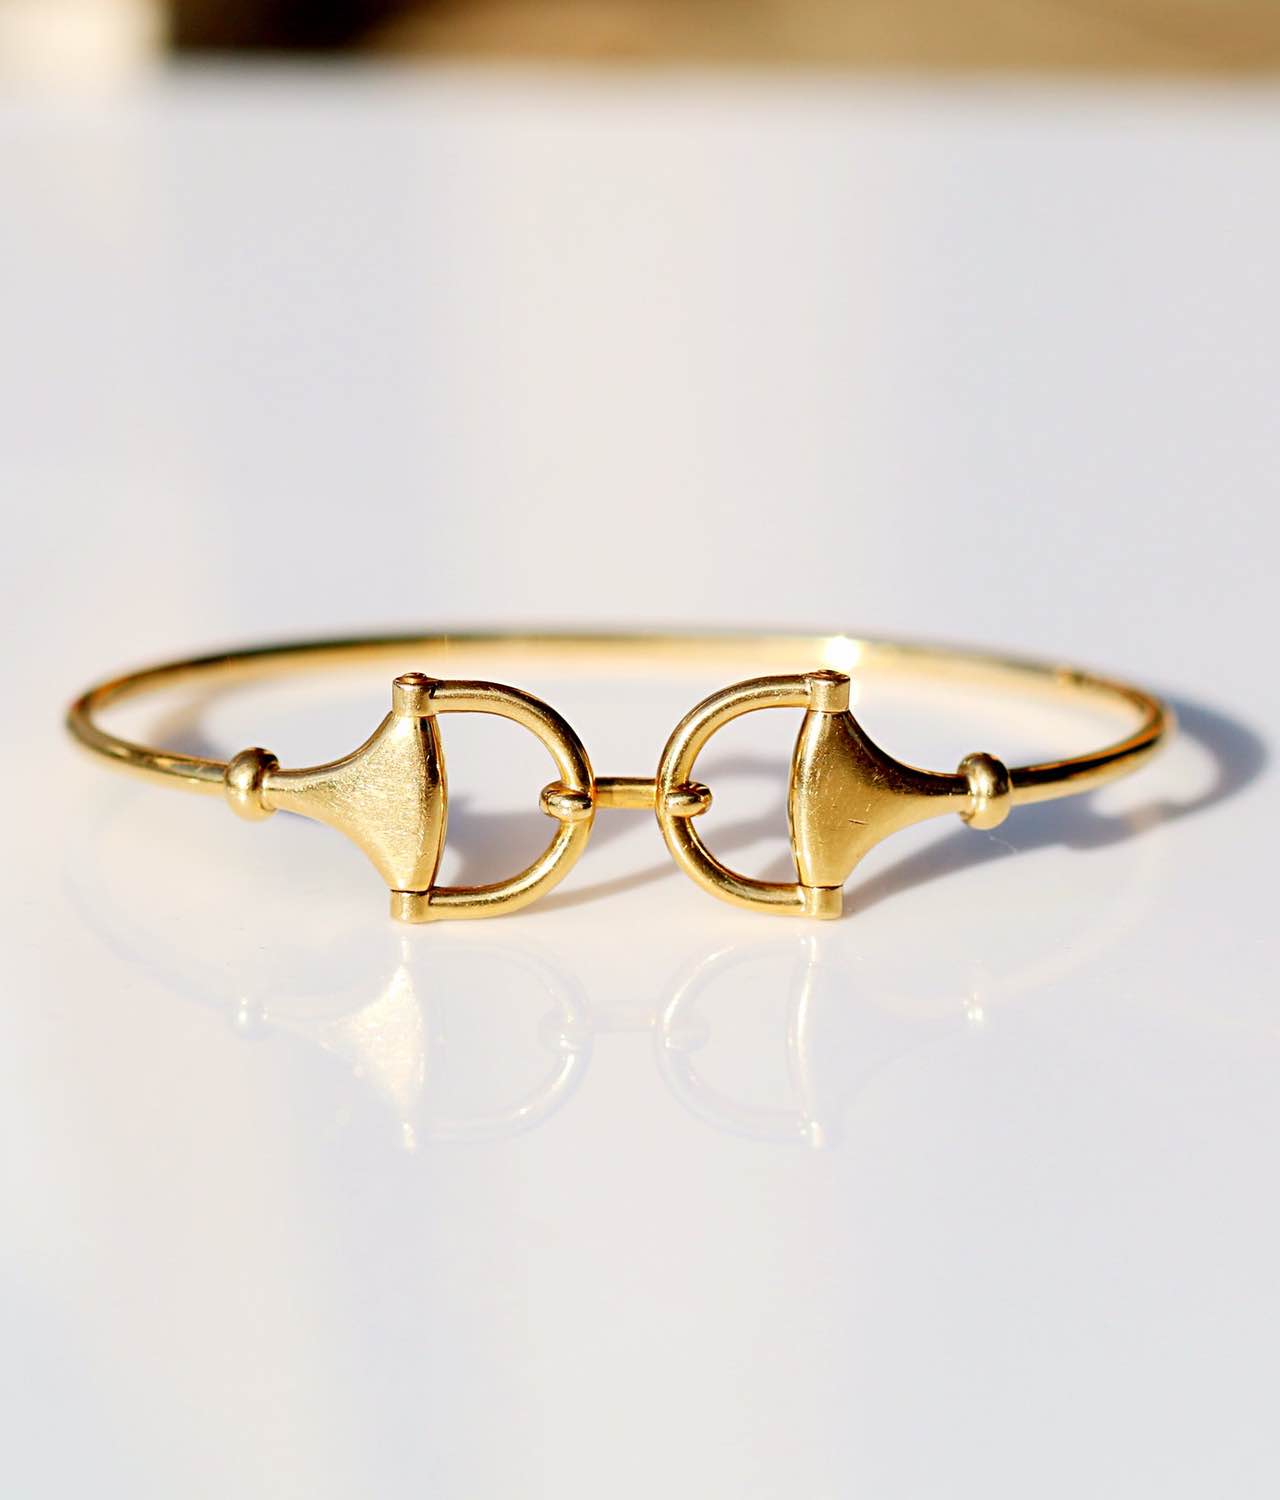 Gucci Horsebit bracelet yellow gold big size - YBA133292002018